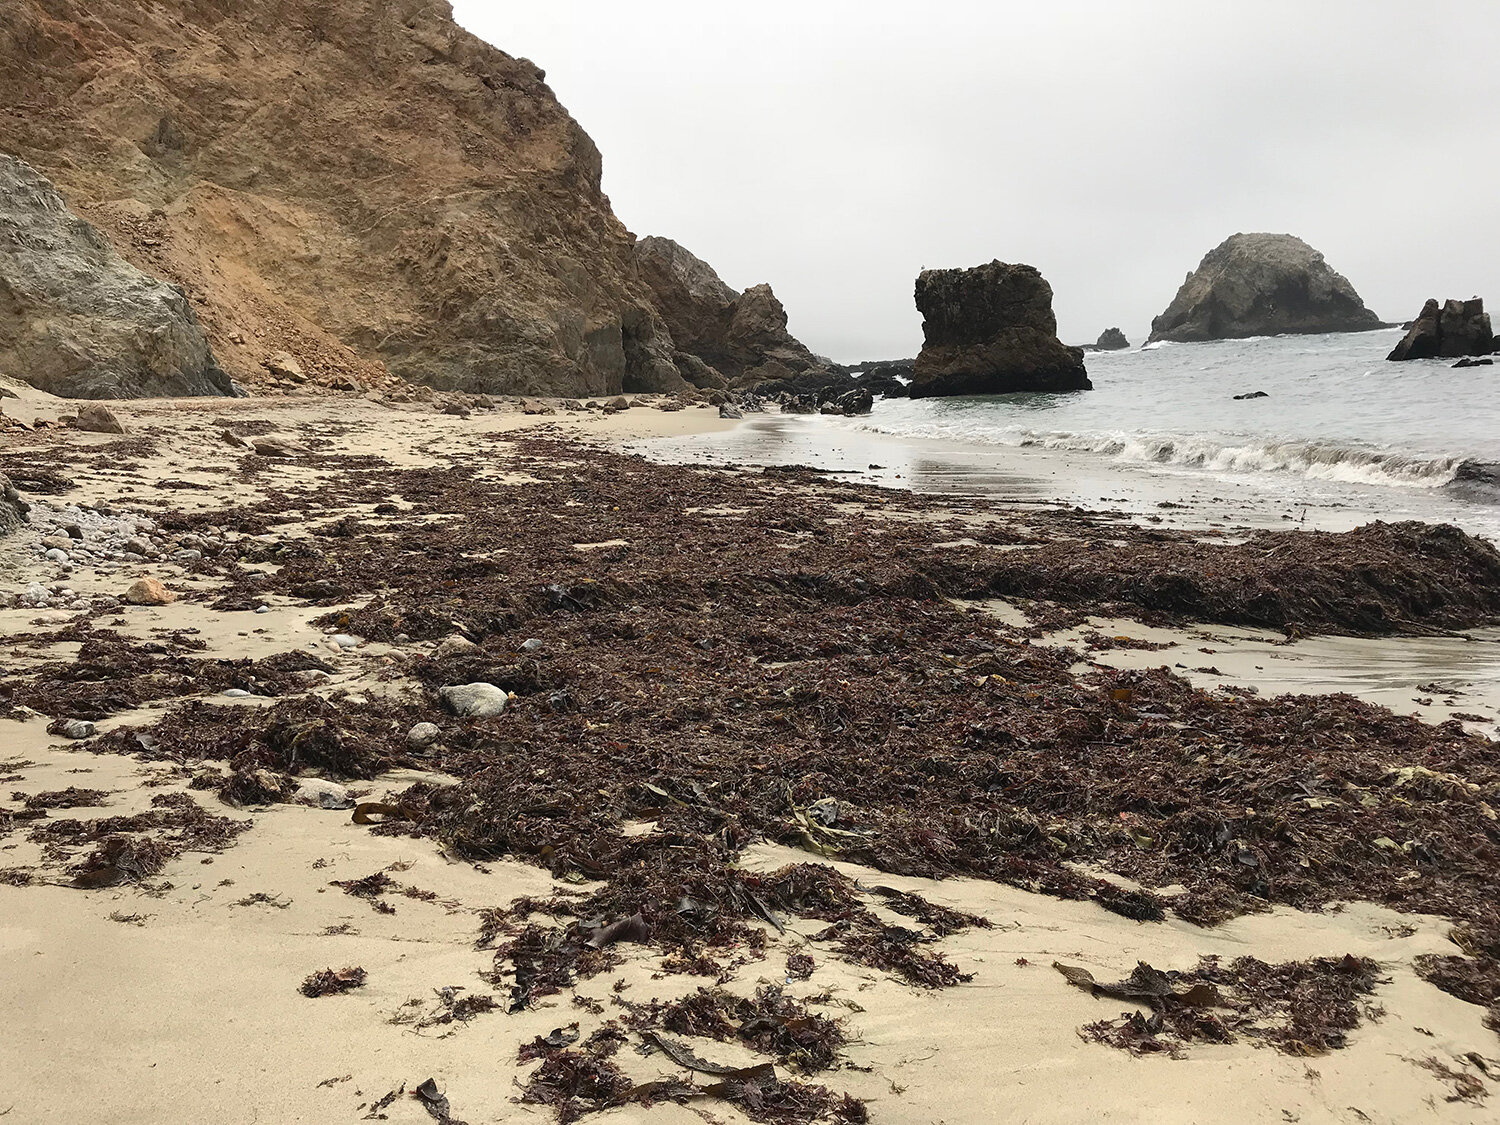 seaweed covers the beach